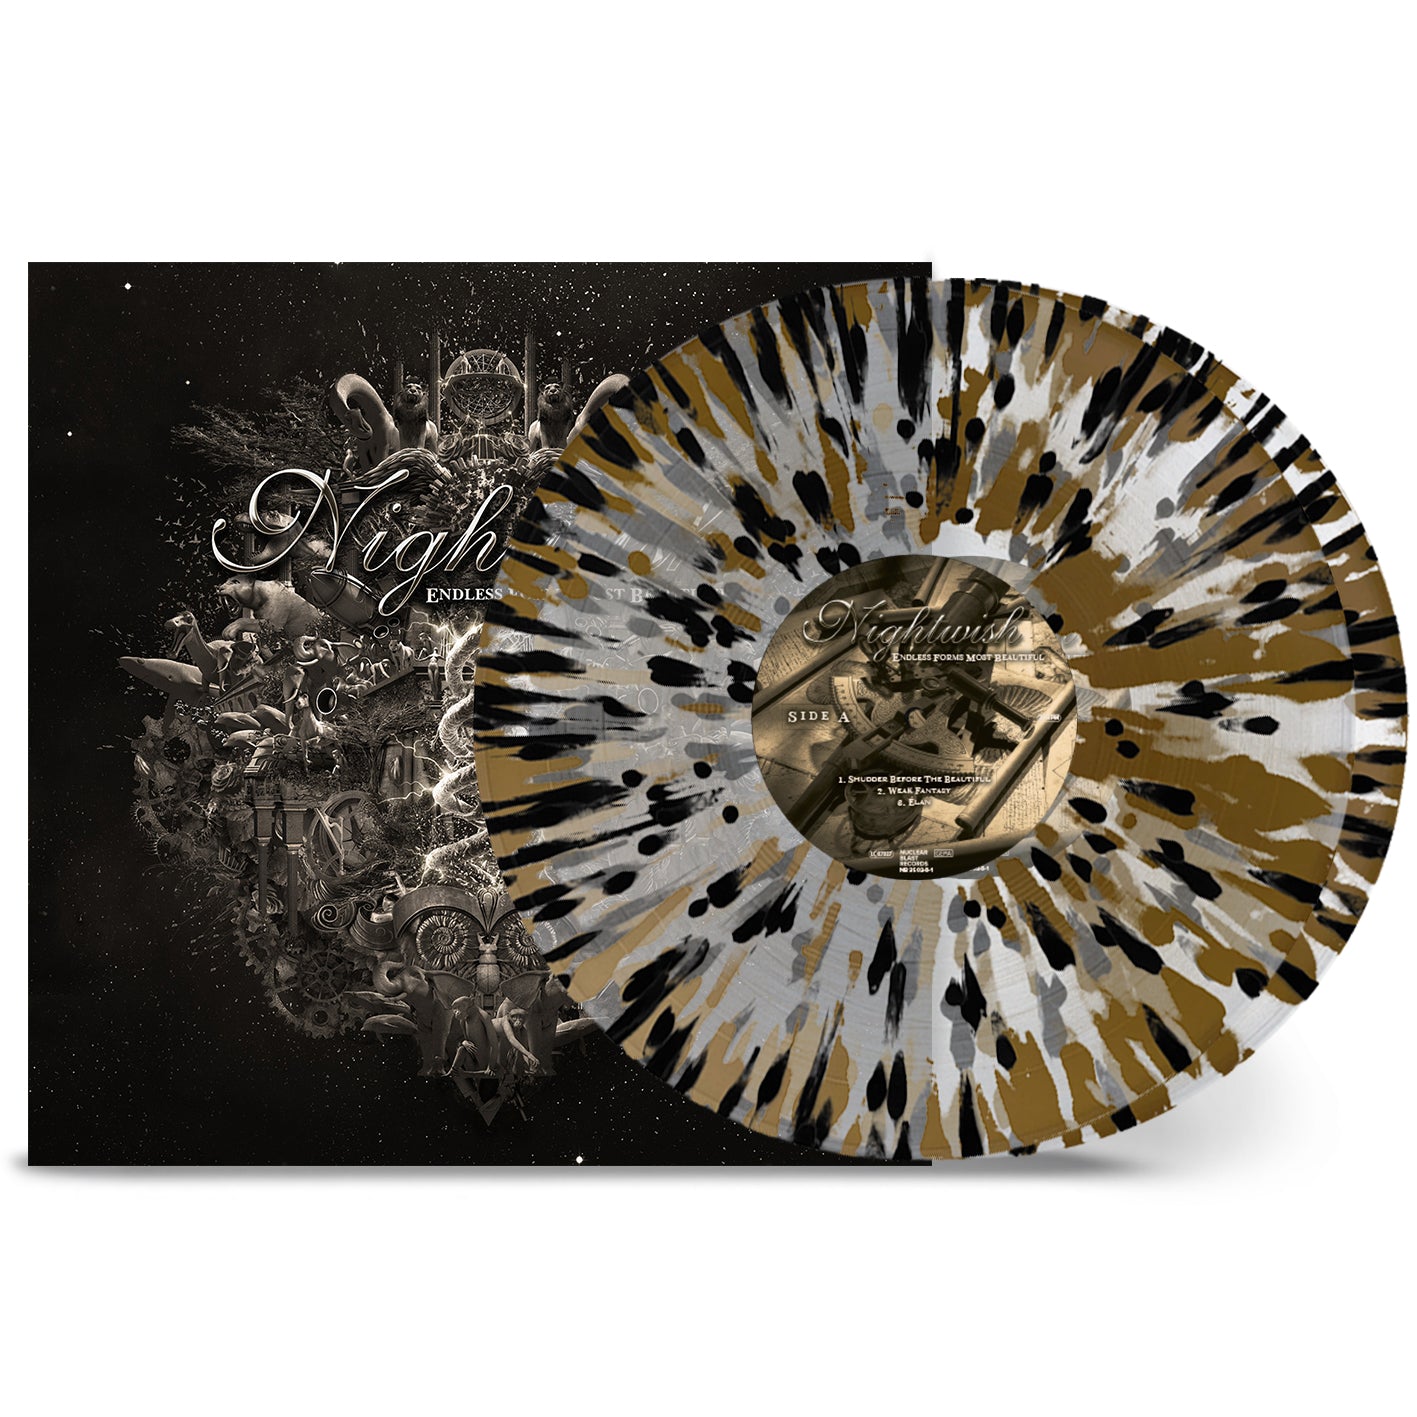 Nightwish "Endless Forms Most Beautiful" 2x12" Clear Gold Black Splatter Vinyl - PRE-ORDER